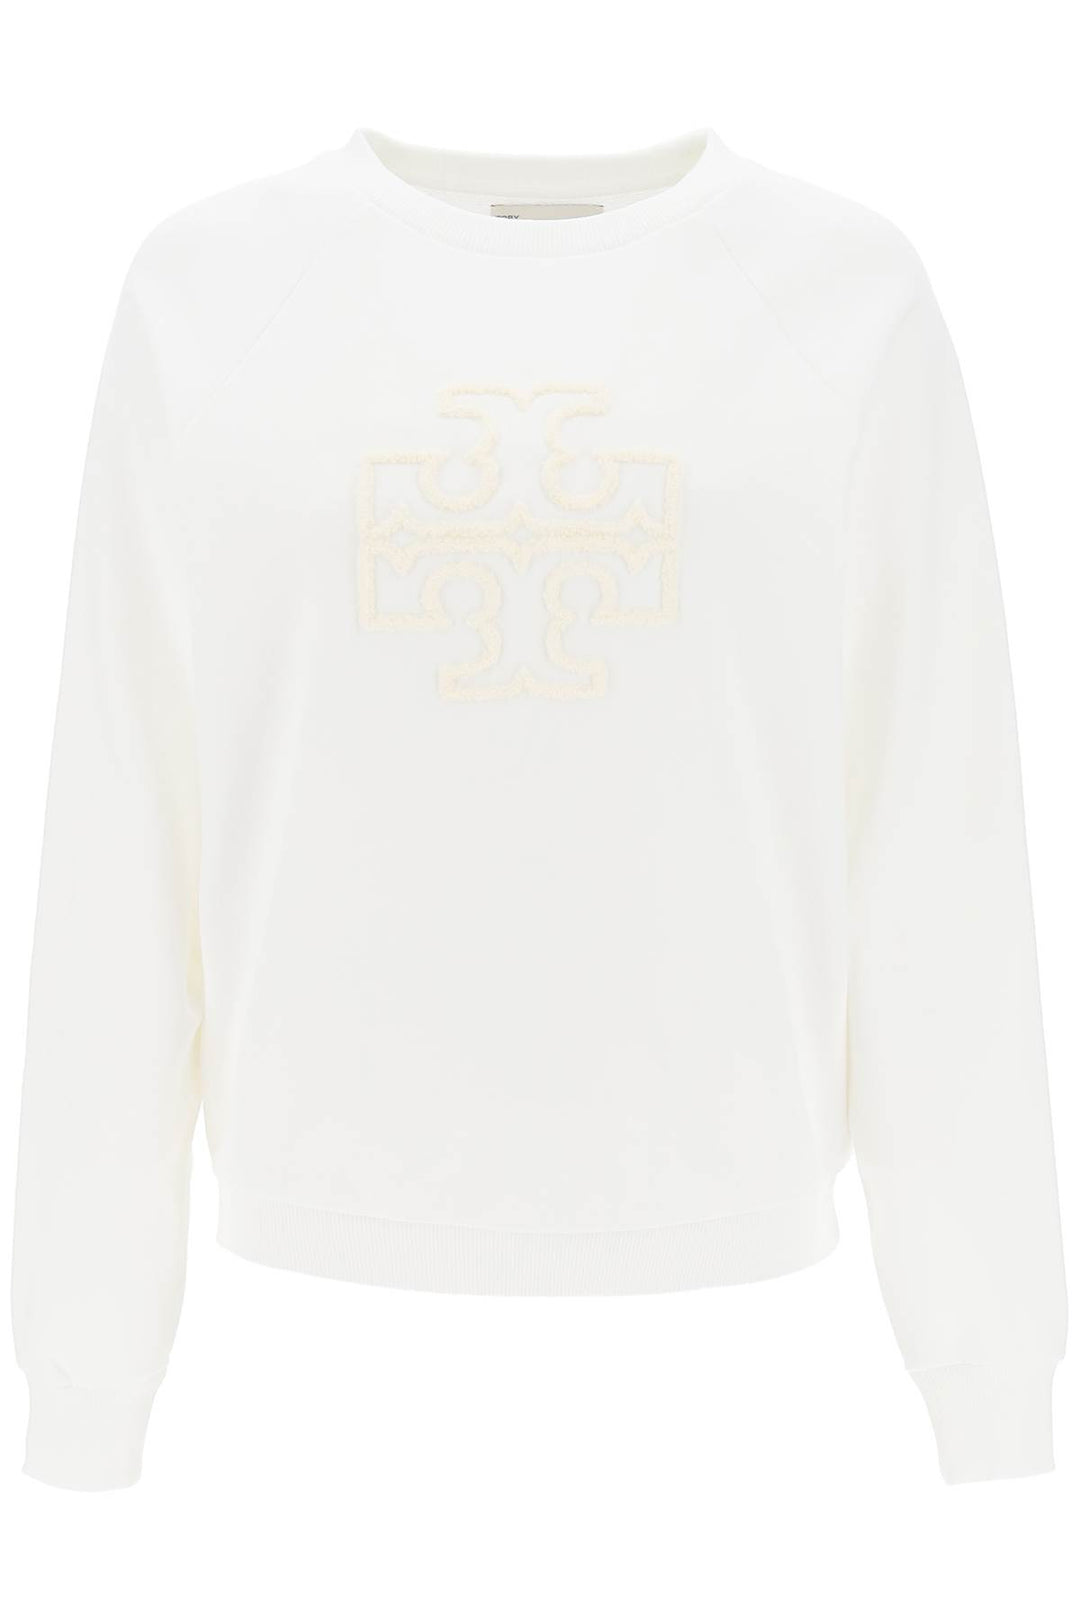 Tory burch crew-neck sweatshirt with t logo-0